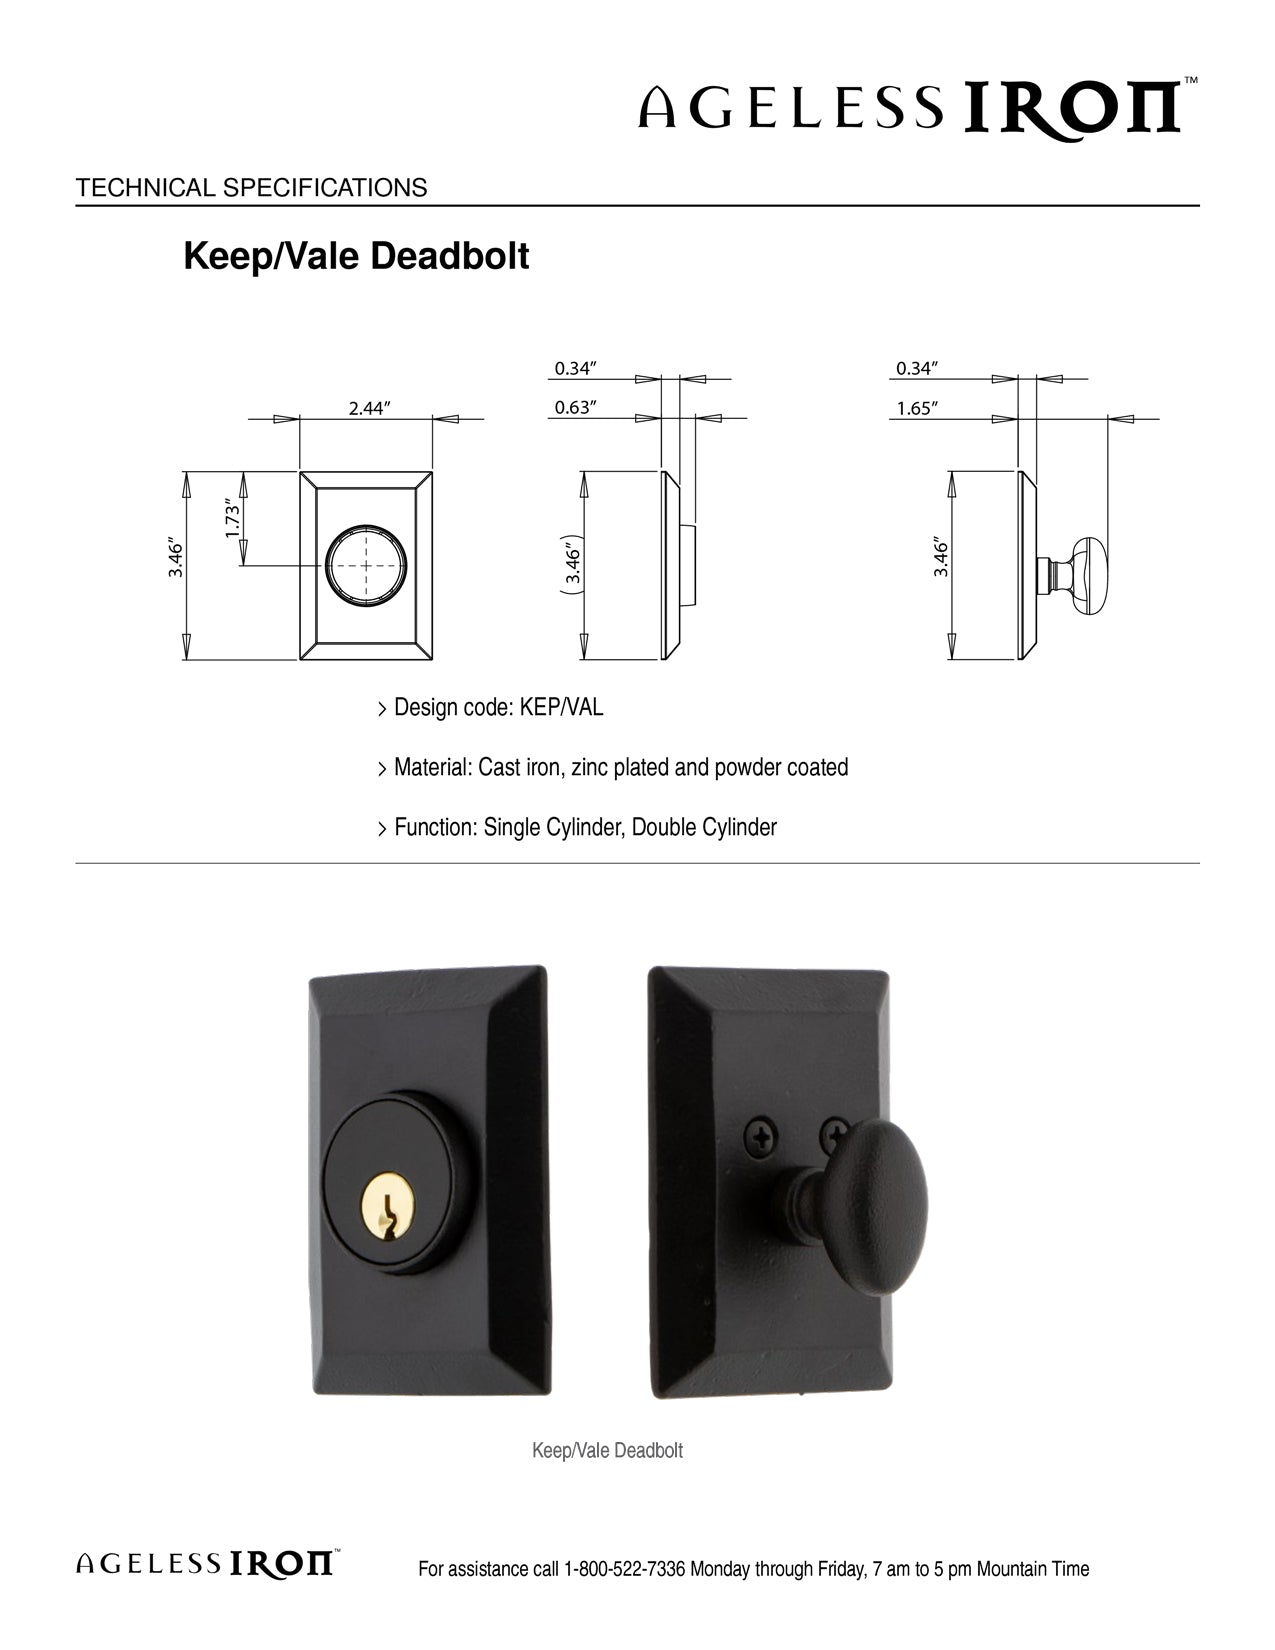 Keep/Vale Deadbolt Technical Specs